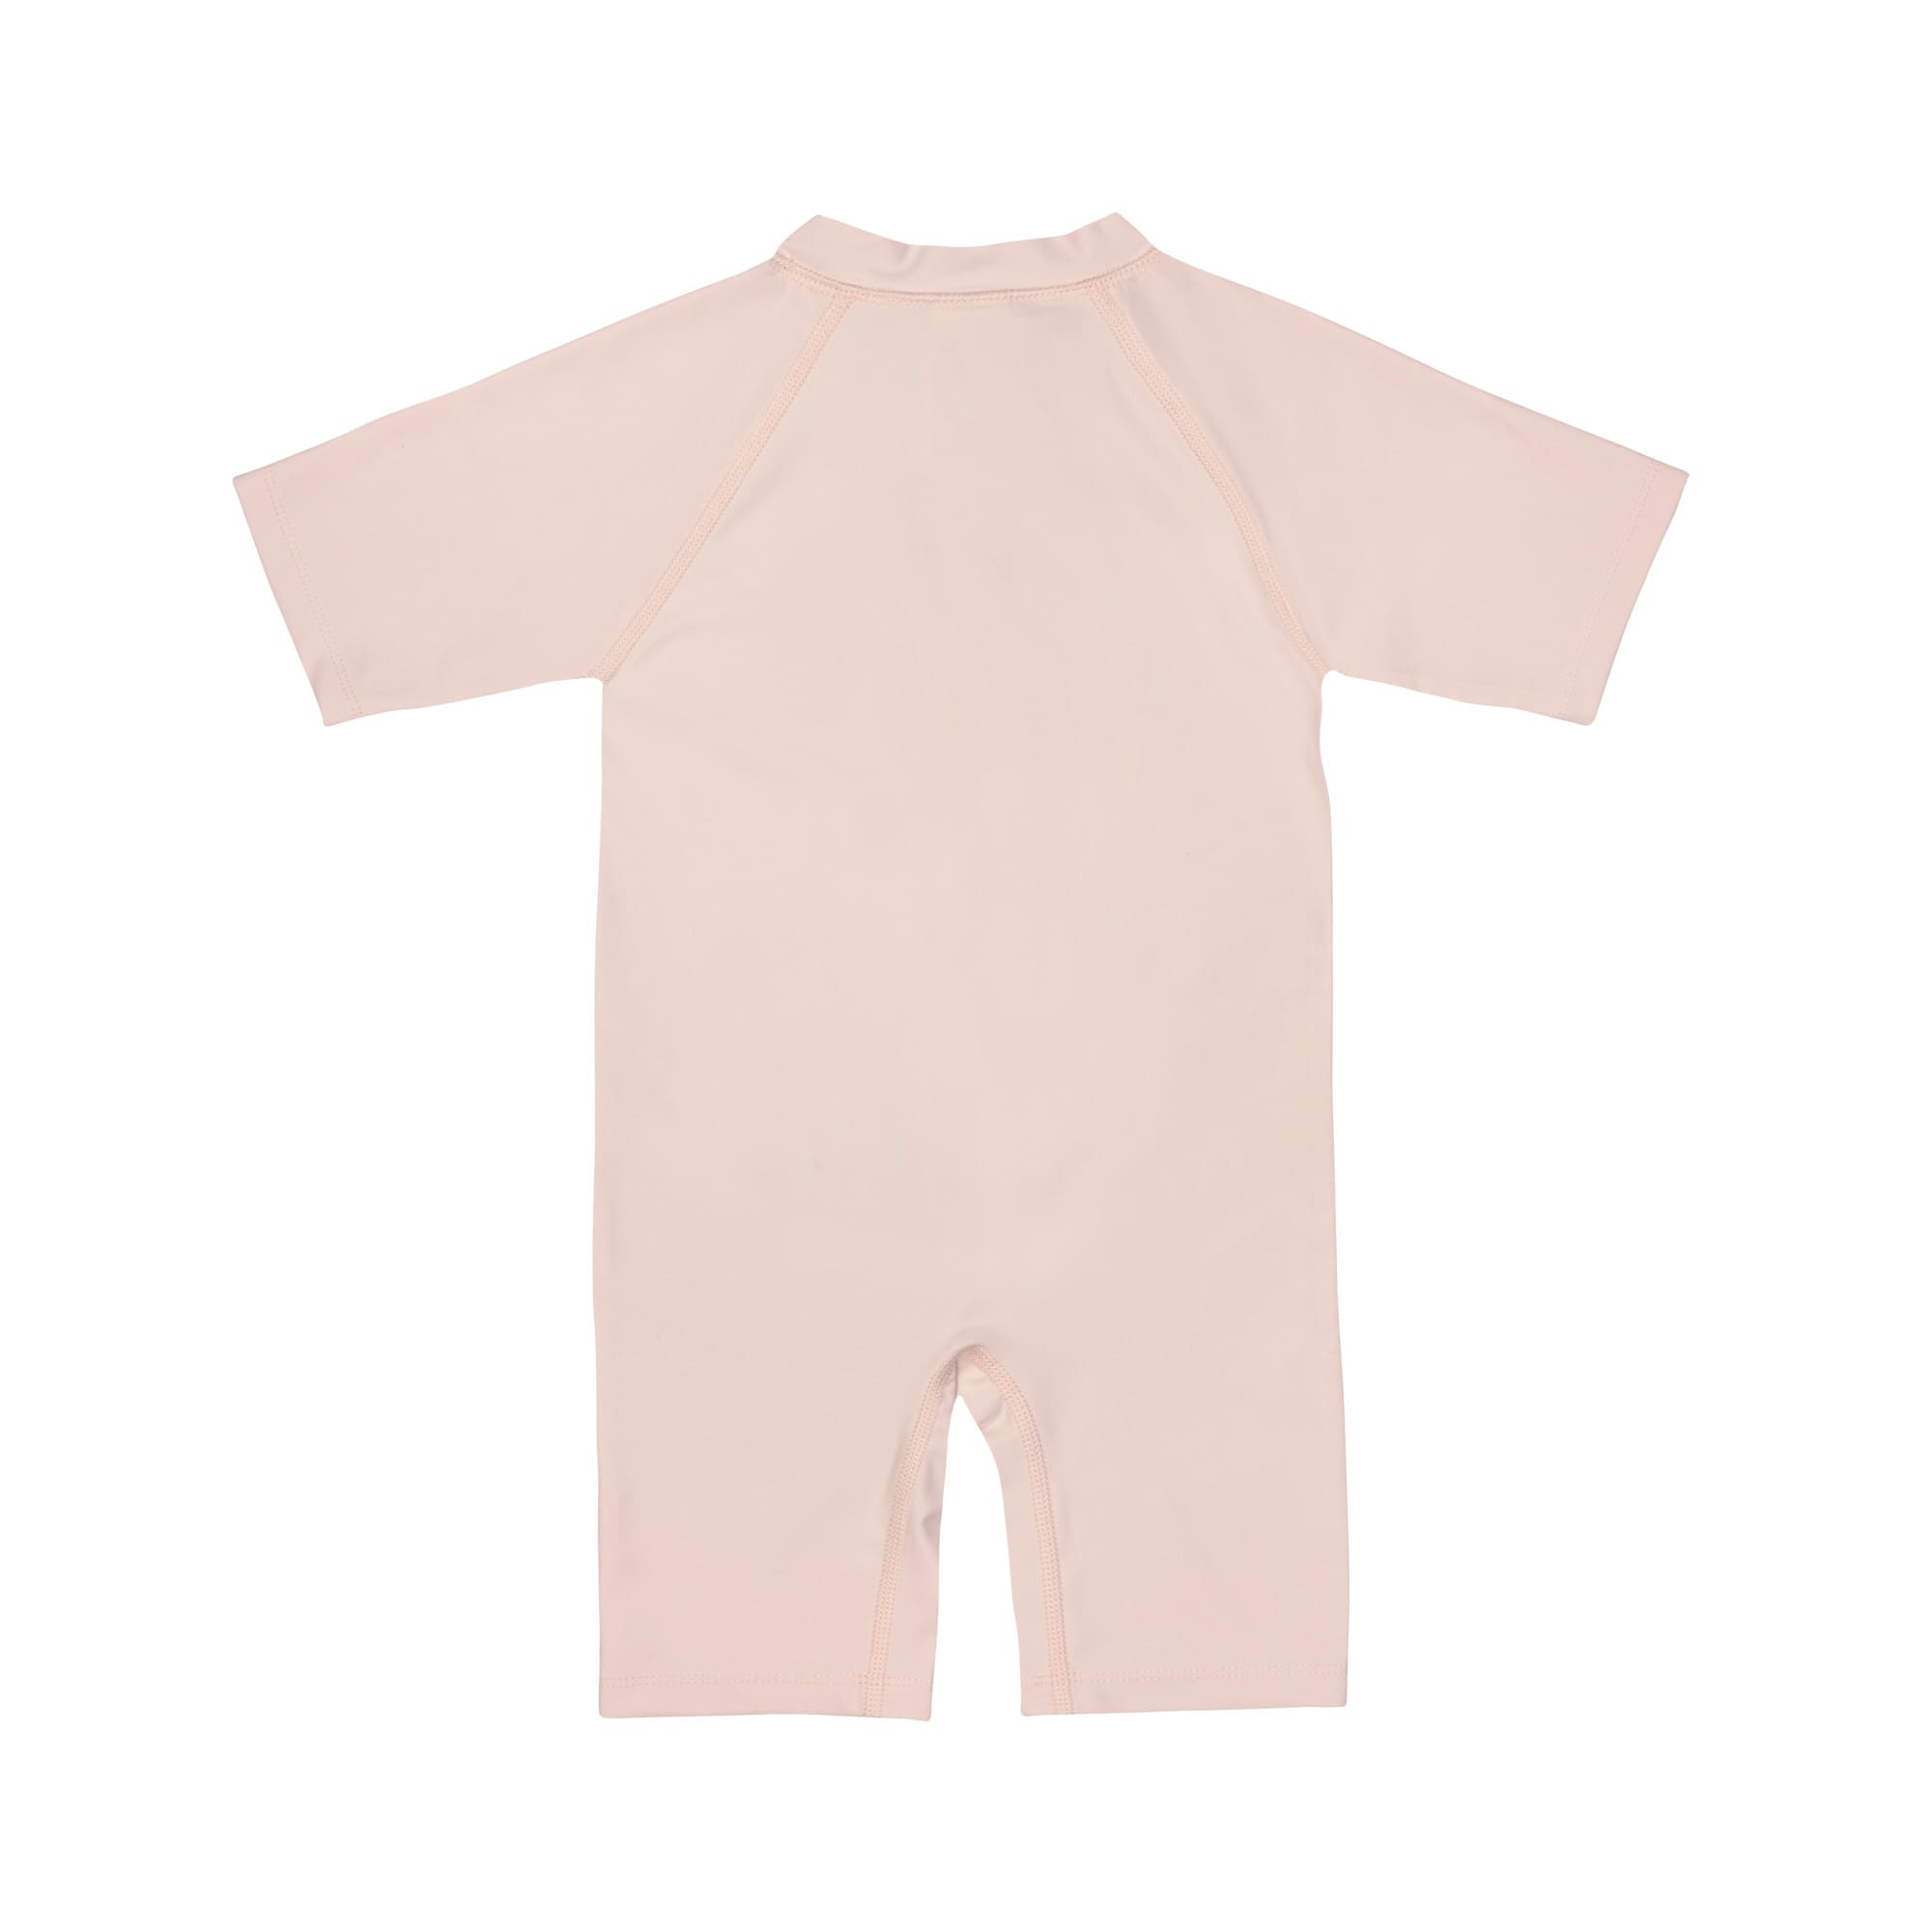 Anti-UV suit Toucan Powder pink - Lassig